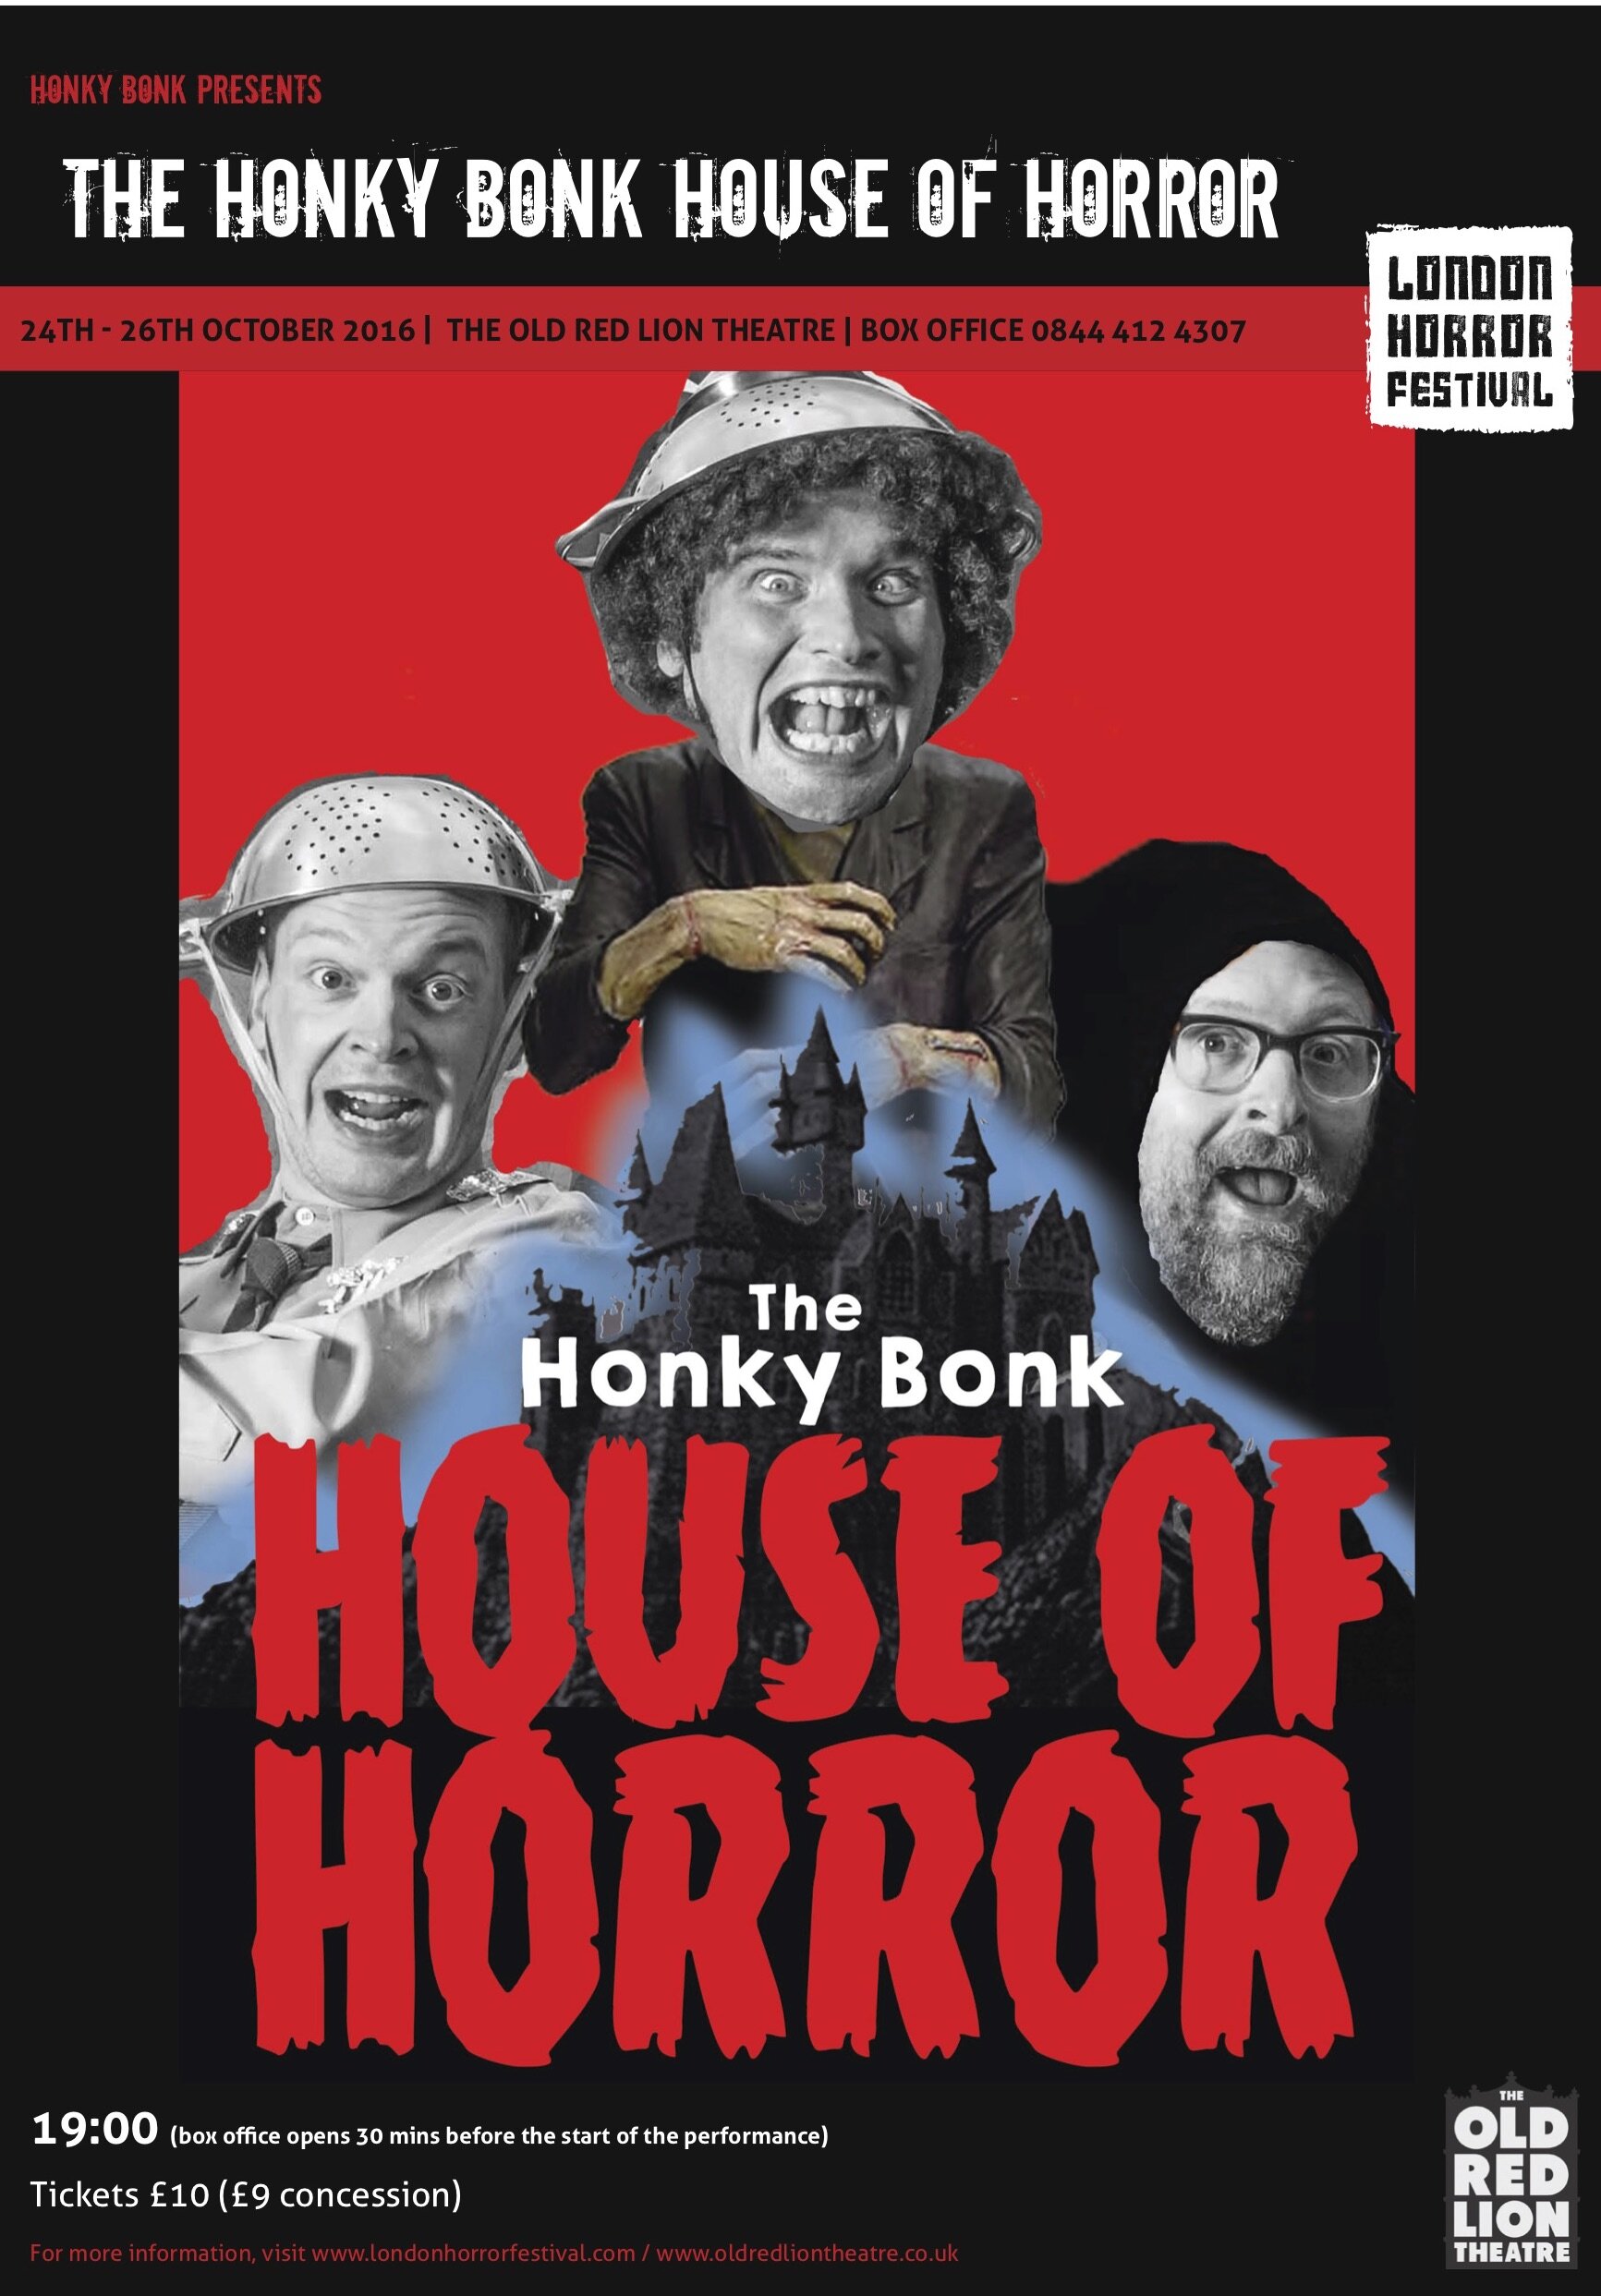 Honky Bonk House of Horror A3 poster copy.jpg